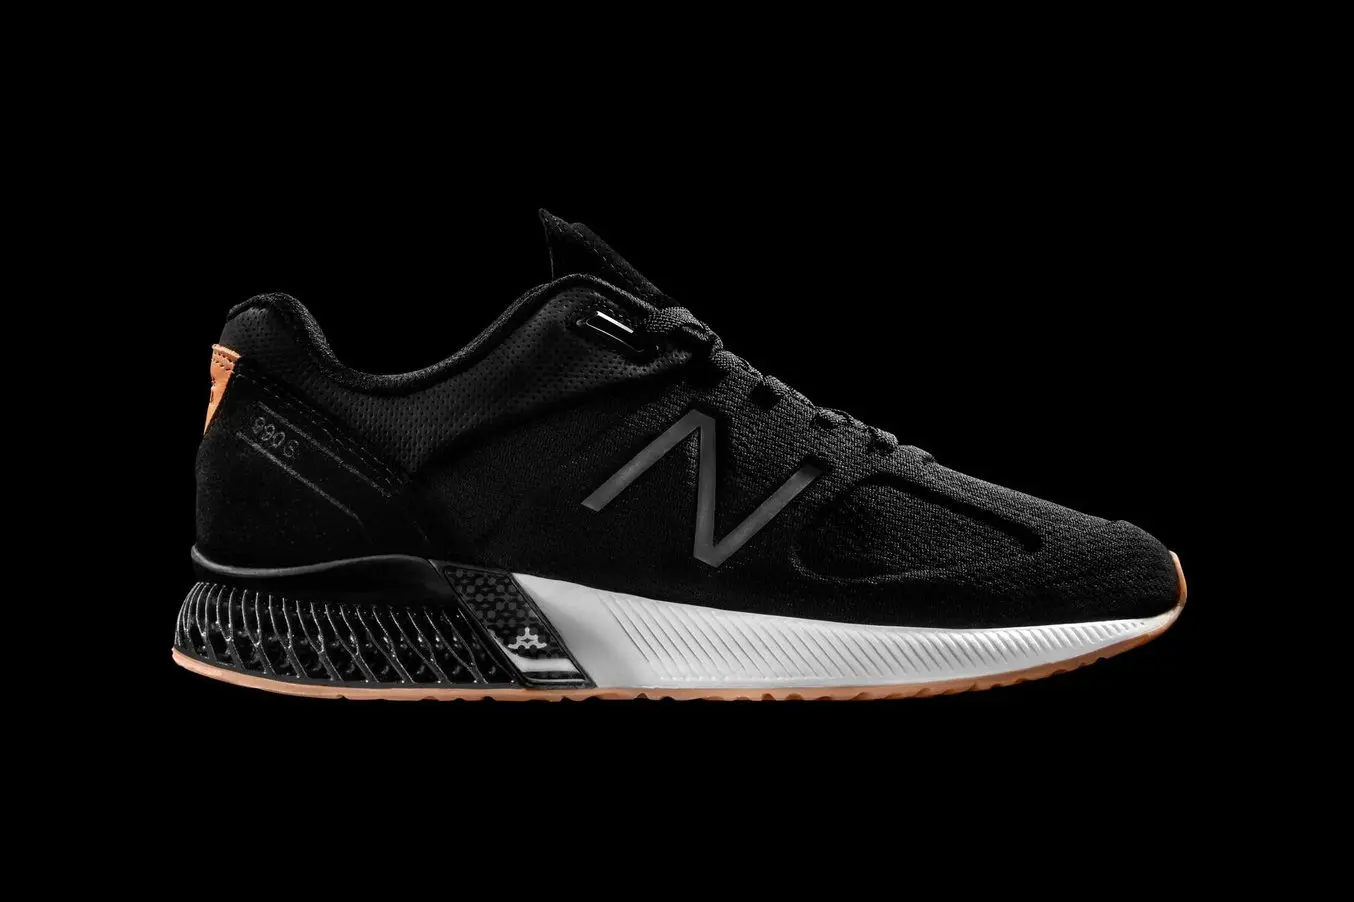 Chaussures New Balance incorporant Rebound Resin, un matériau d'impression 3D semblable au silicone.